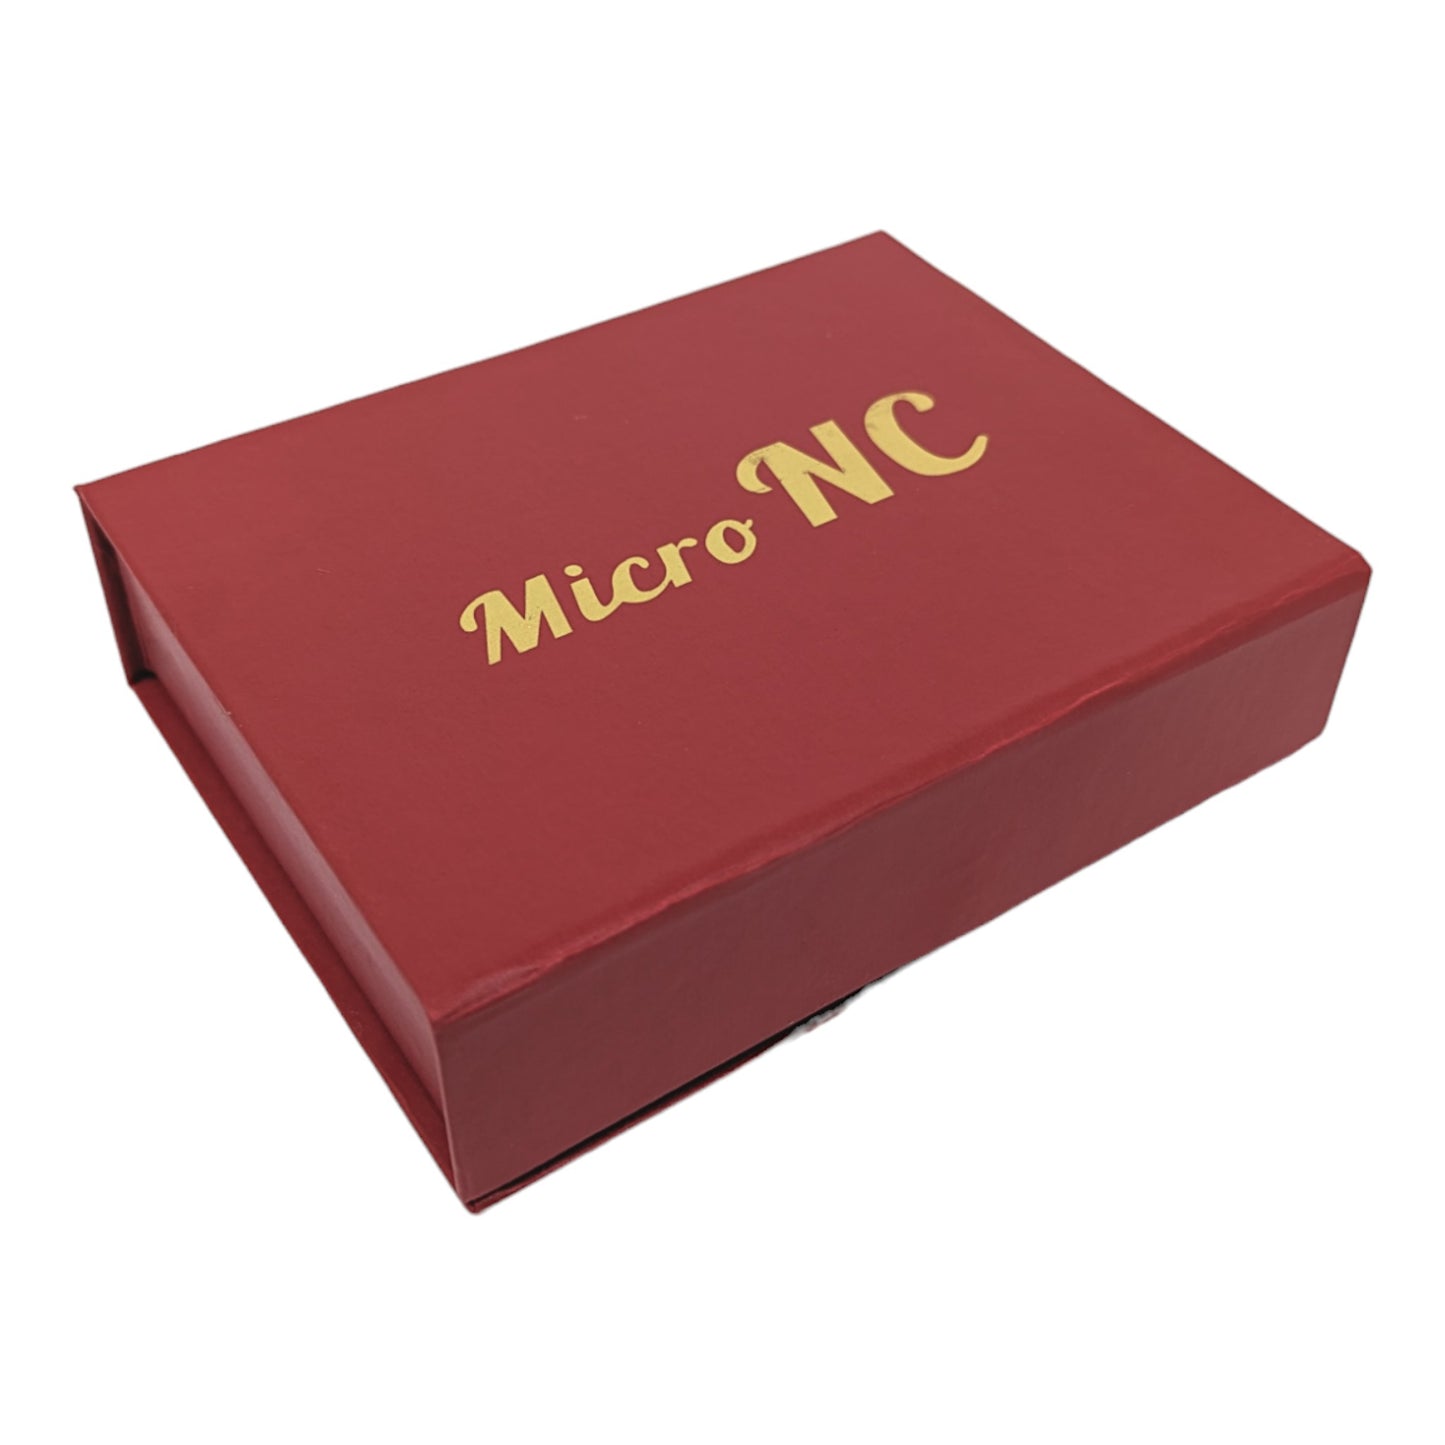 Micro NC Nectar Collector Kit